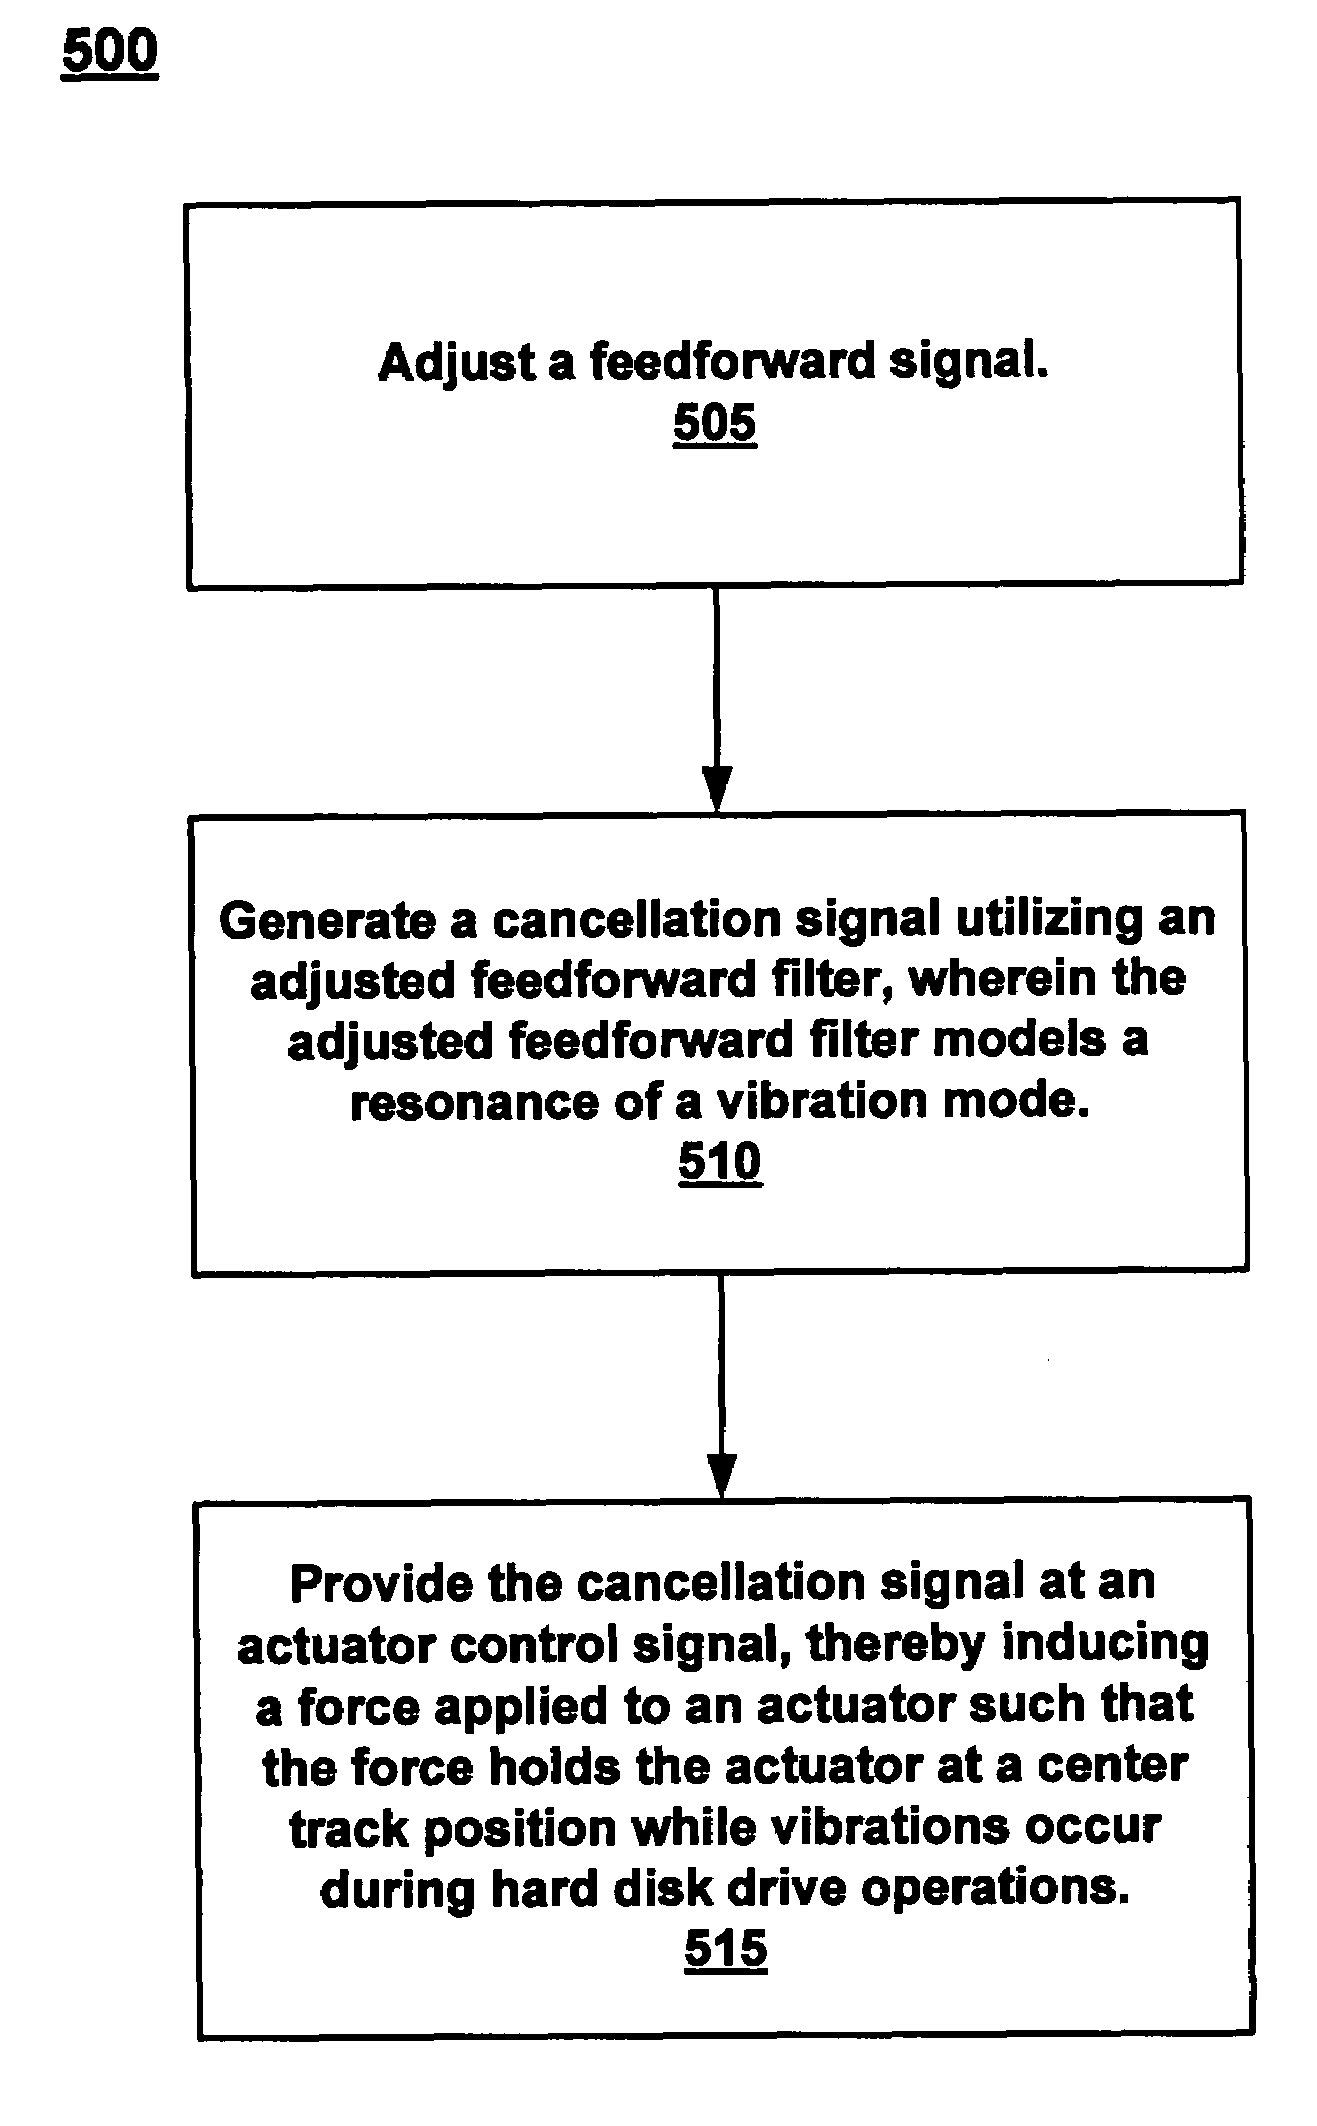 Hard disk drive vibration cancellation using adaptive filter